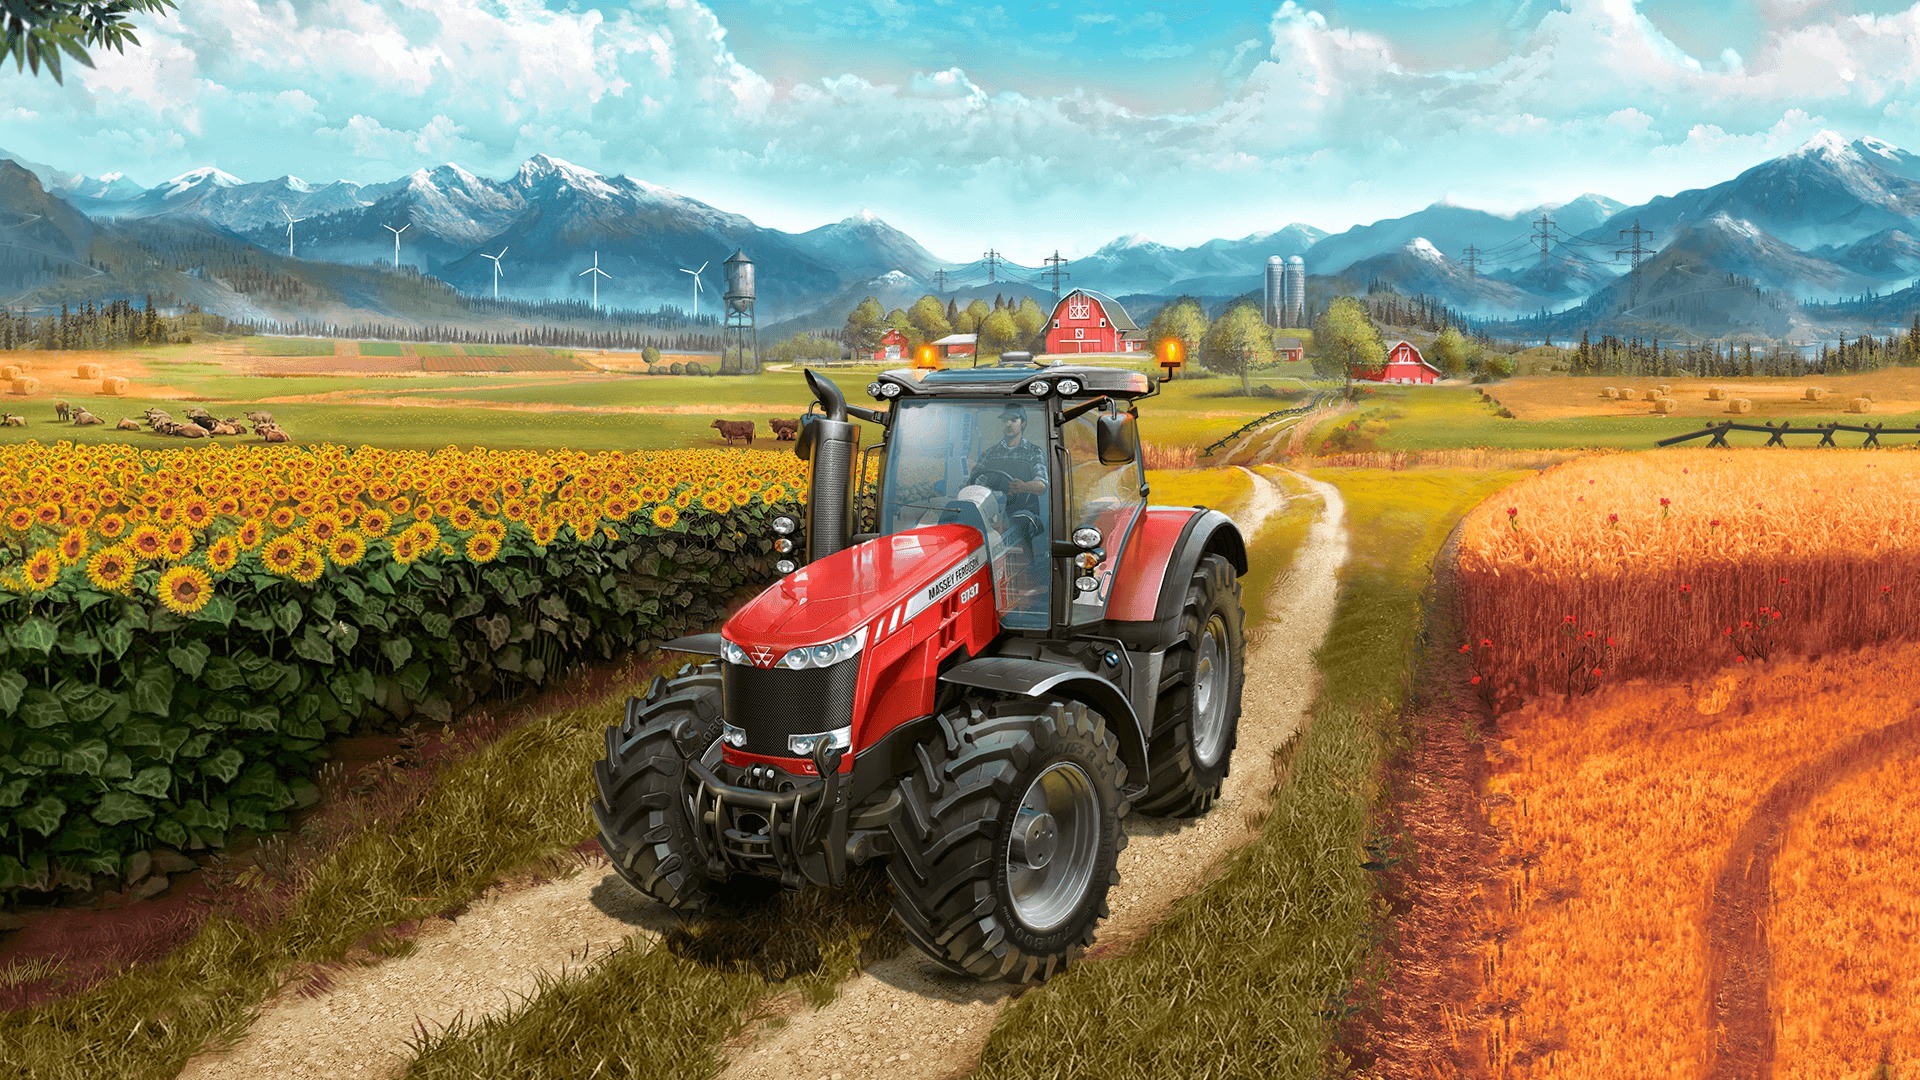 xbox 360 farming simulator 17